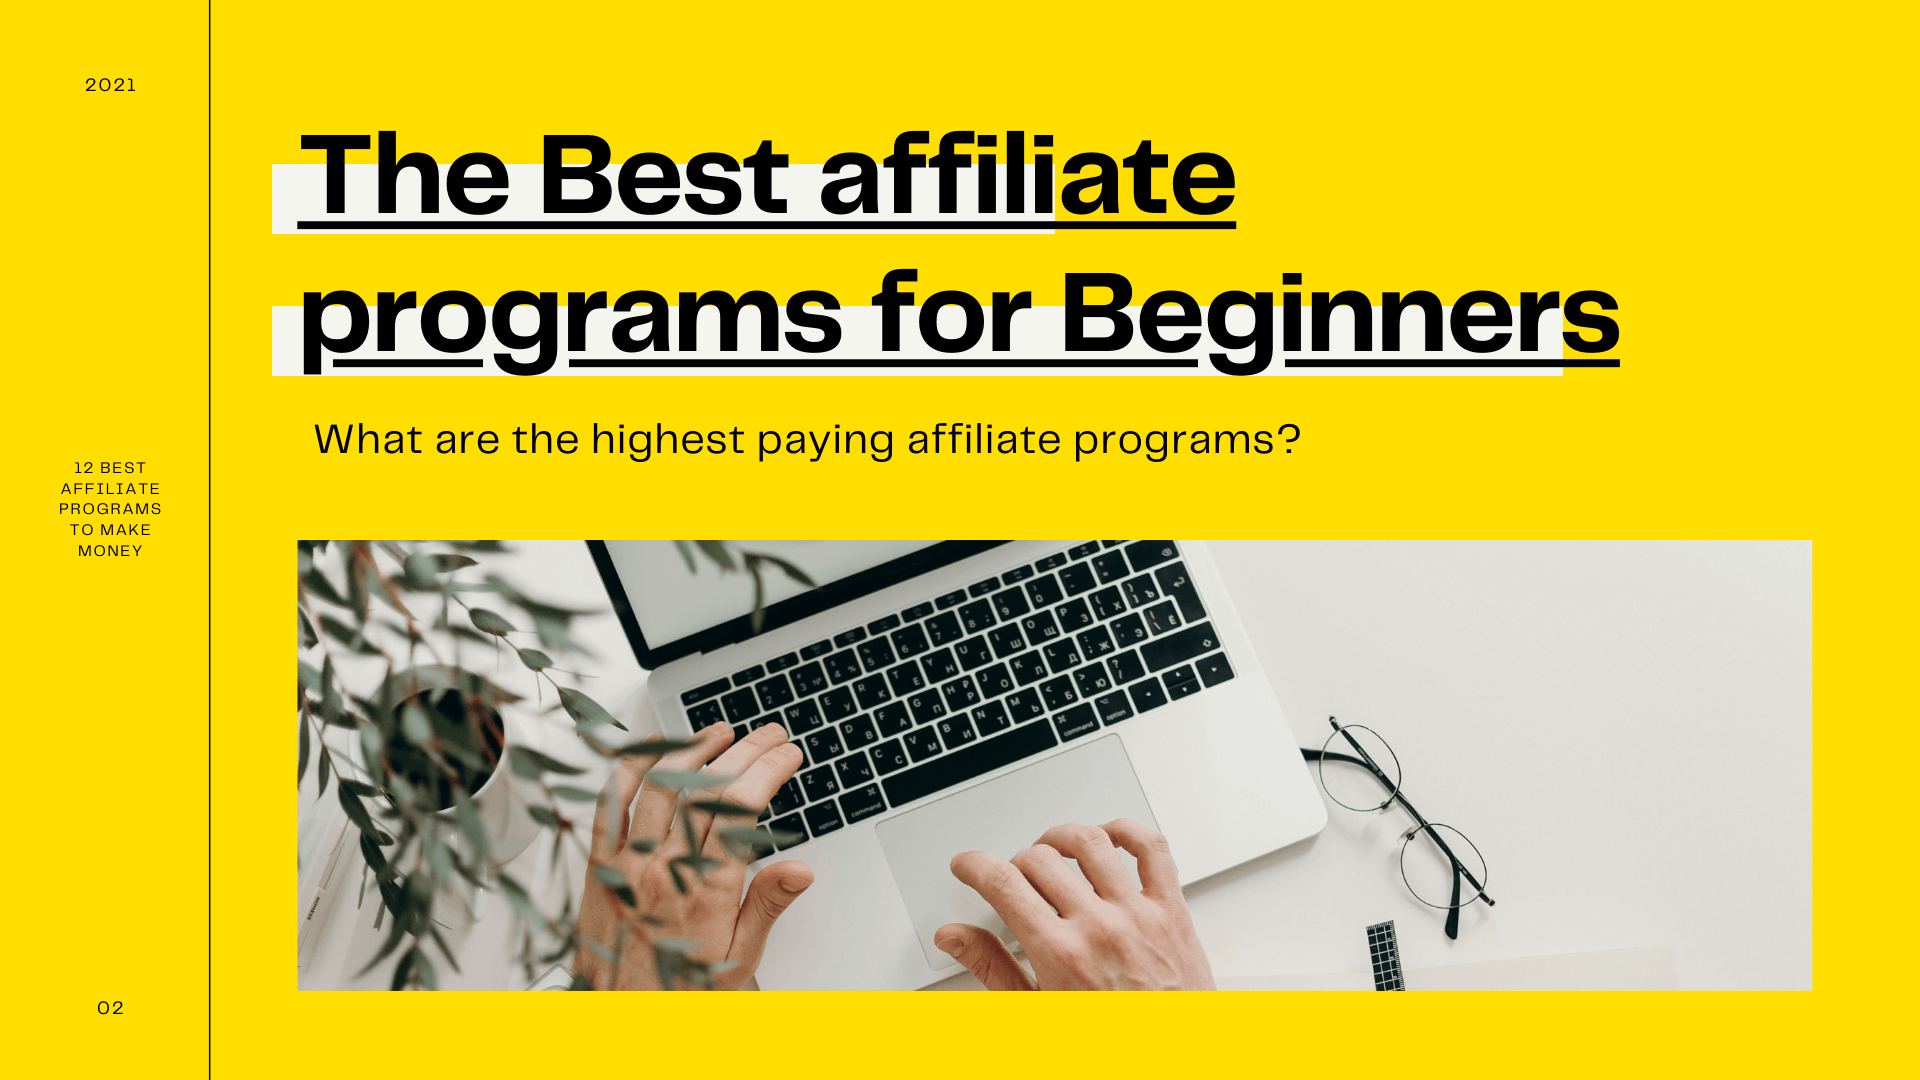 12 best affiliate programs for beginners to make money 2021